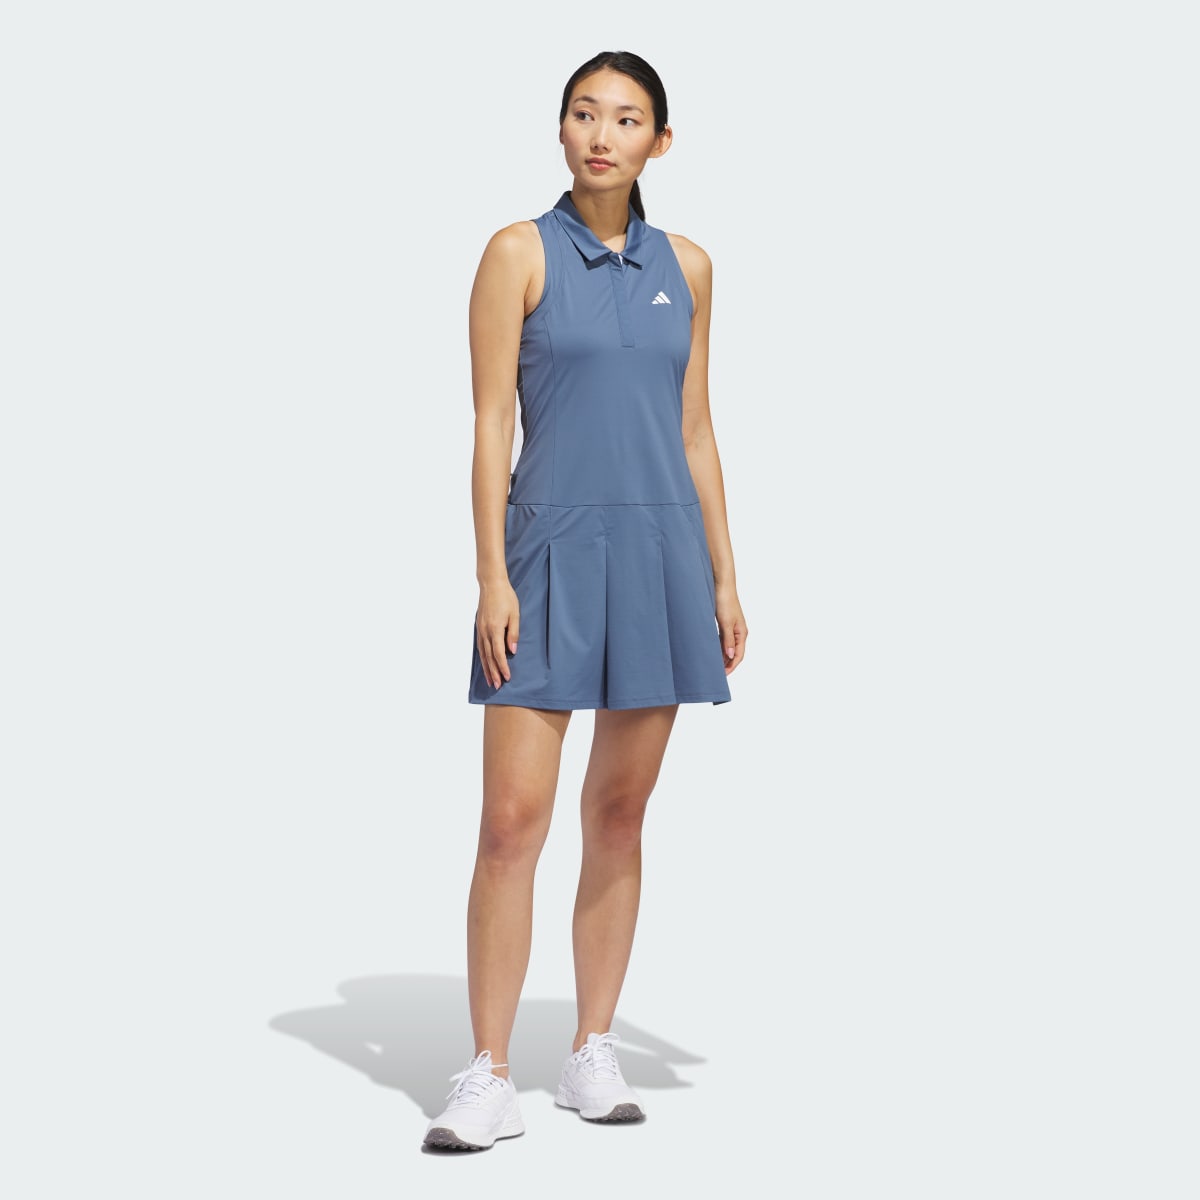 Adidas Ultimate365 Tour Pleated Dress. 8